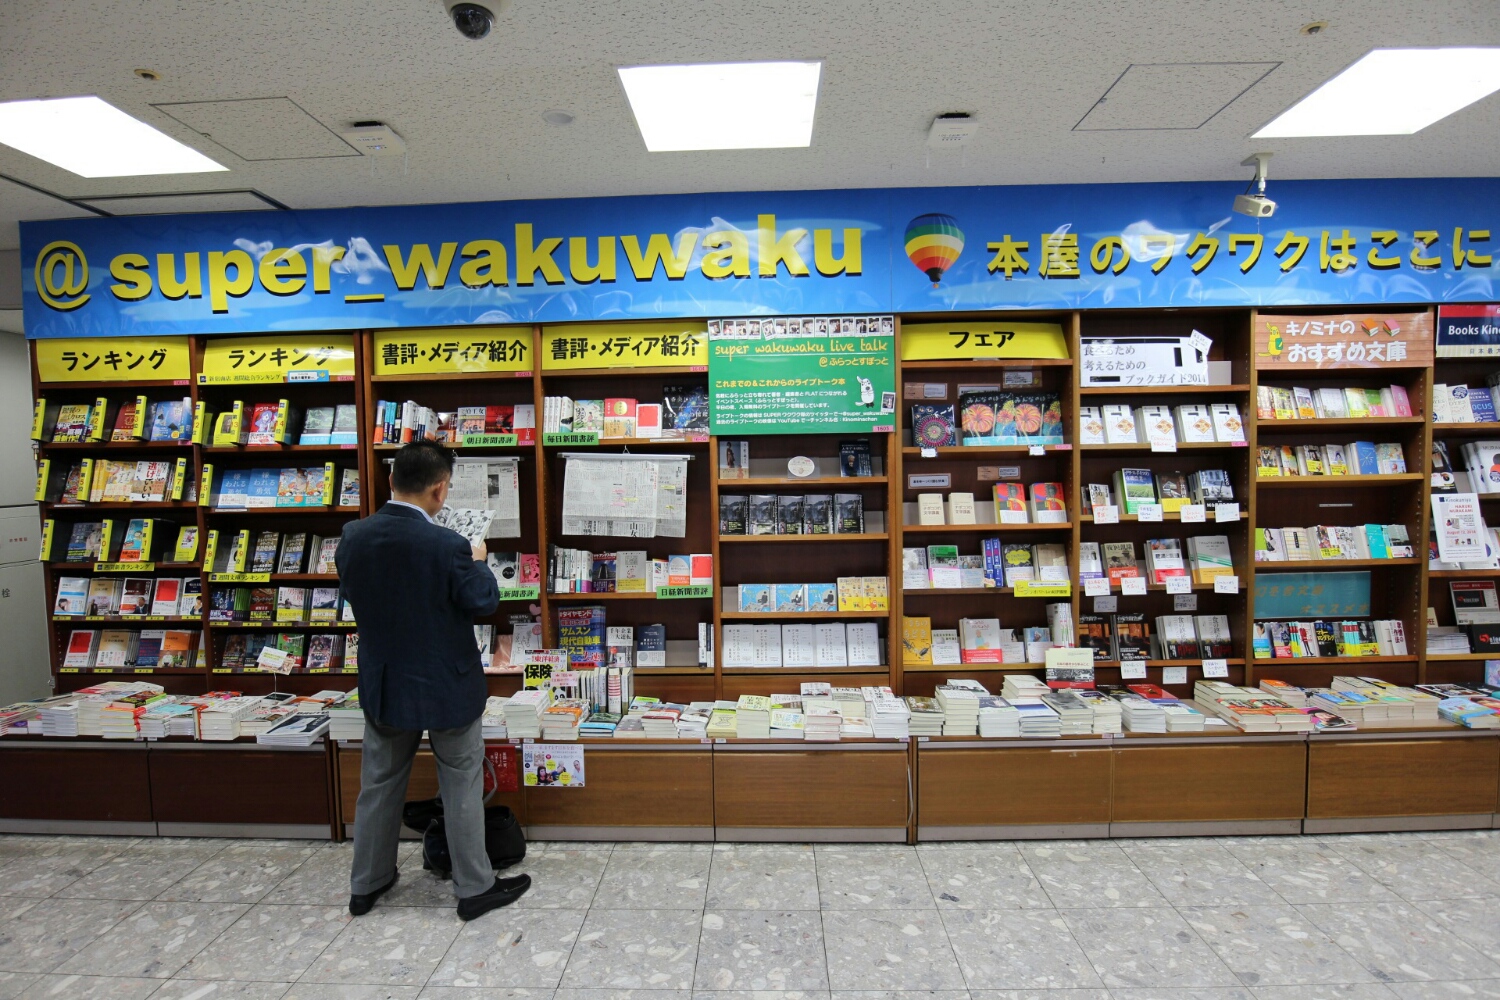 「SUPERワクワク隊」による本棚「@super_wakuwaku」